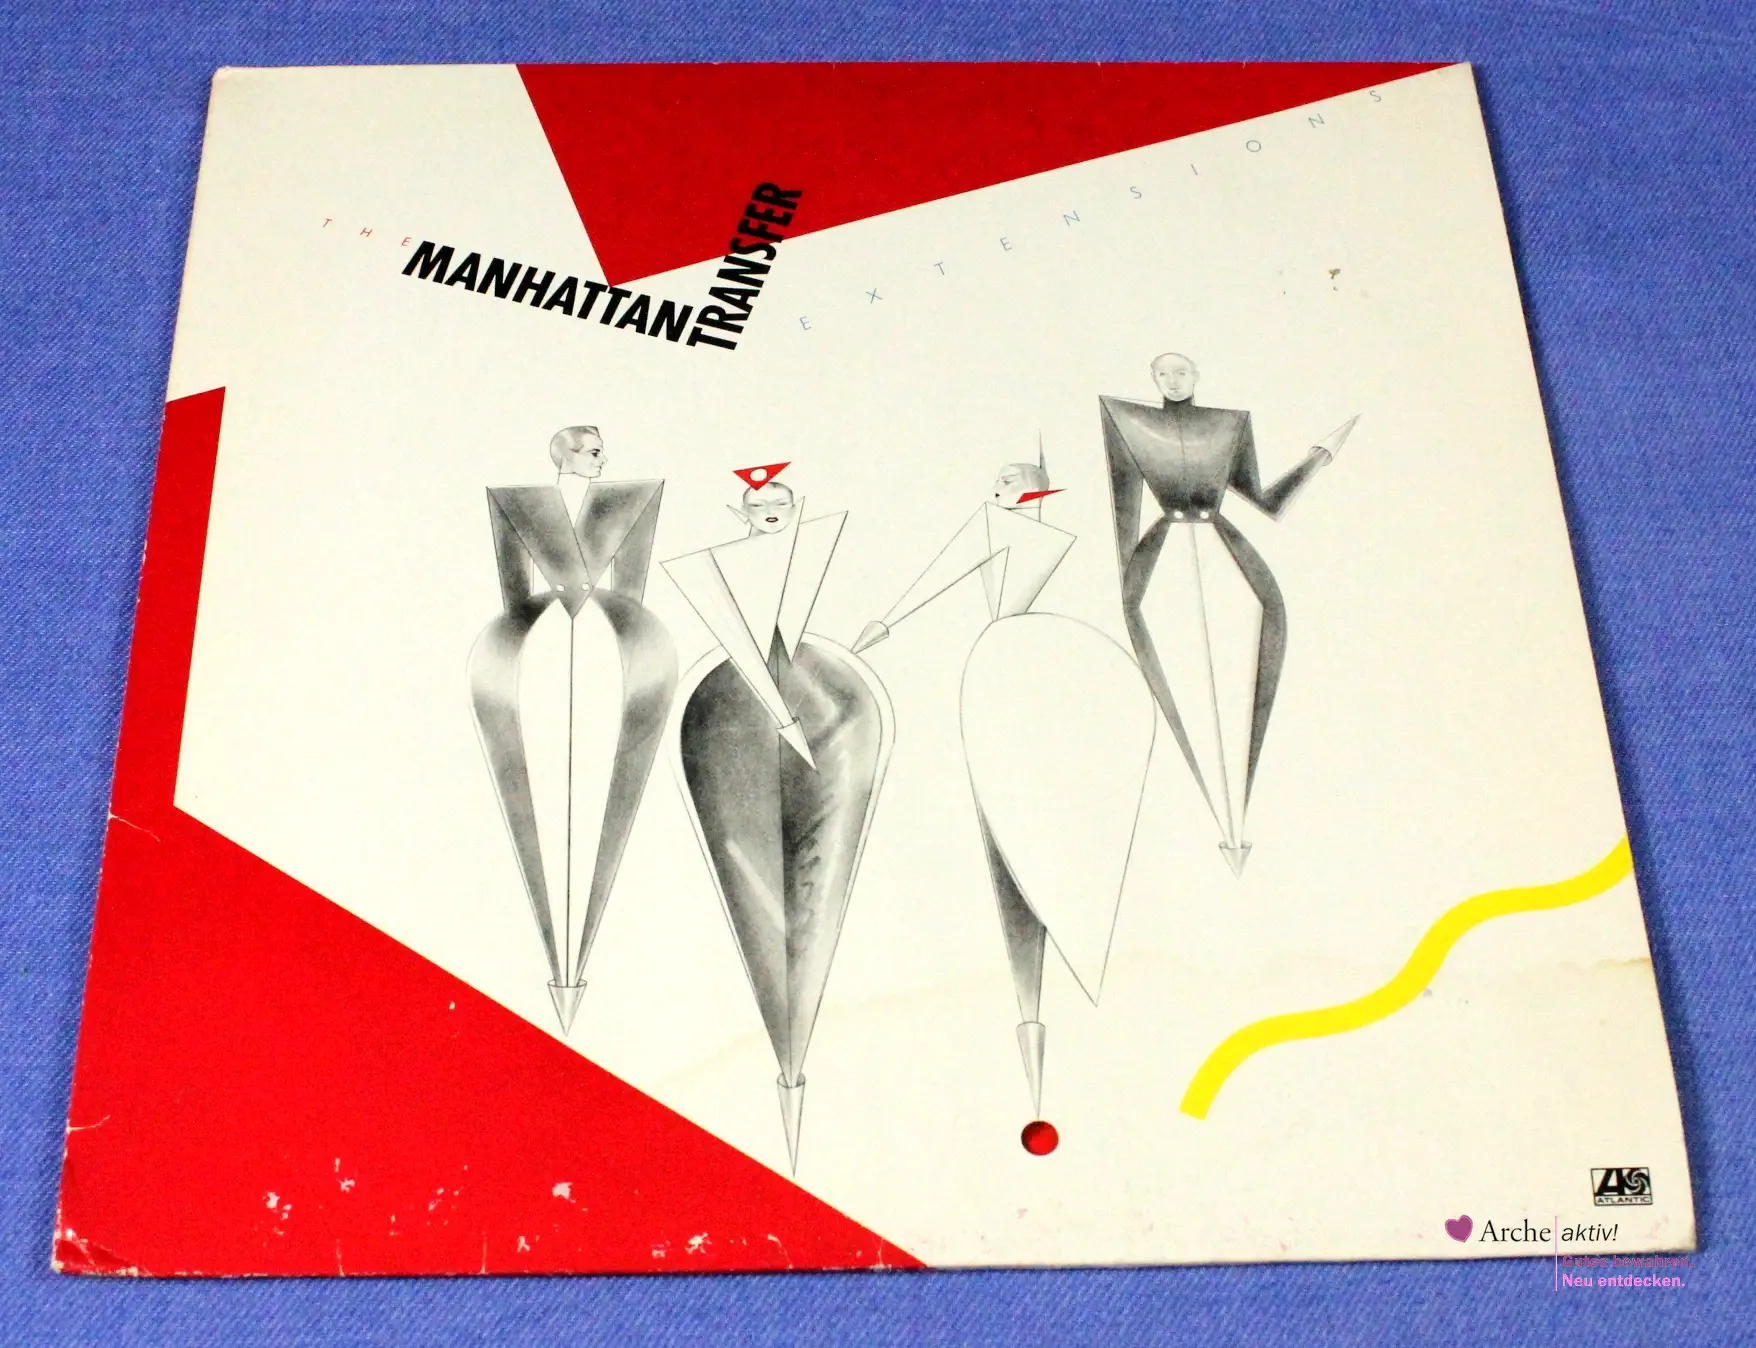 Manhattan Transfer - Extensions (Vinyl) LP, gebraucht